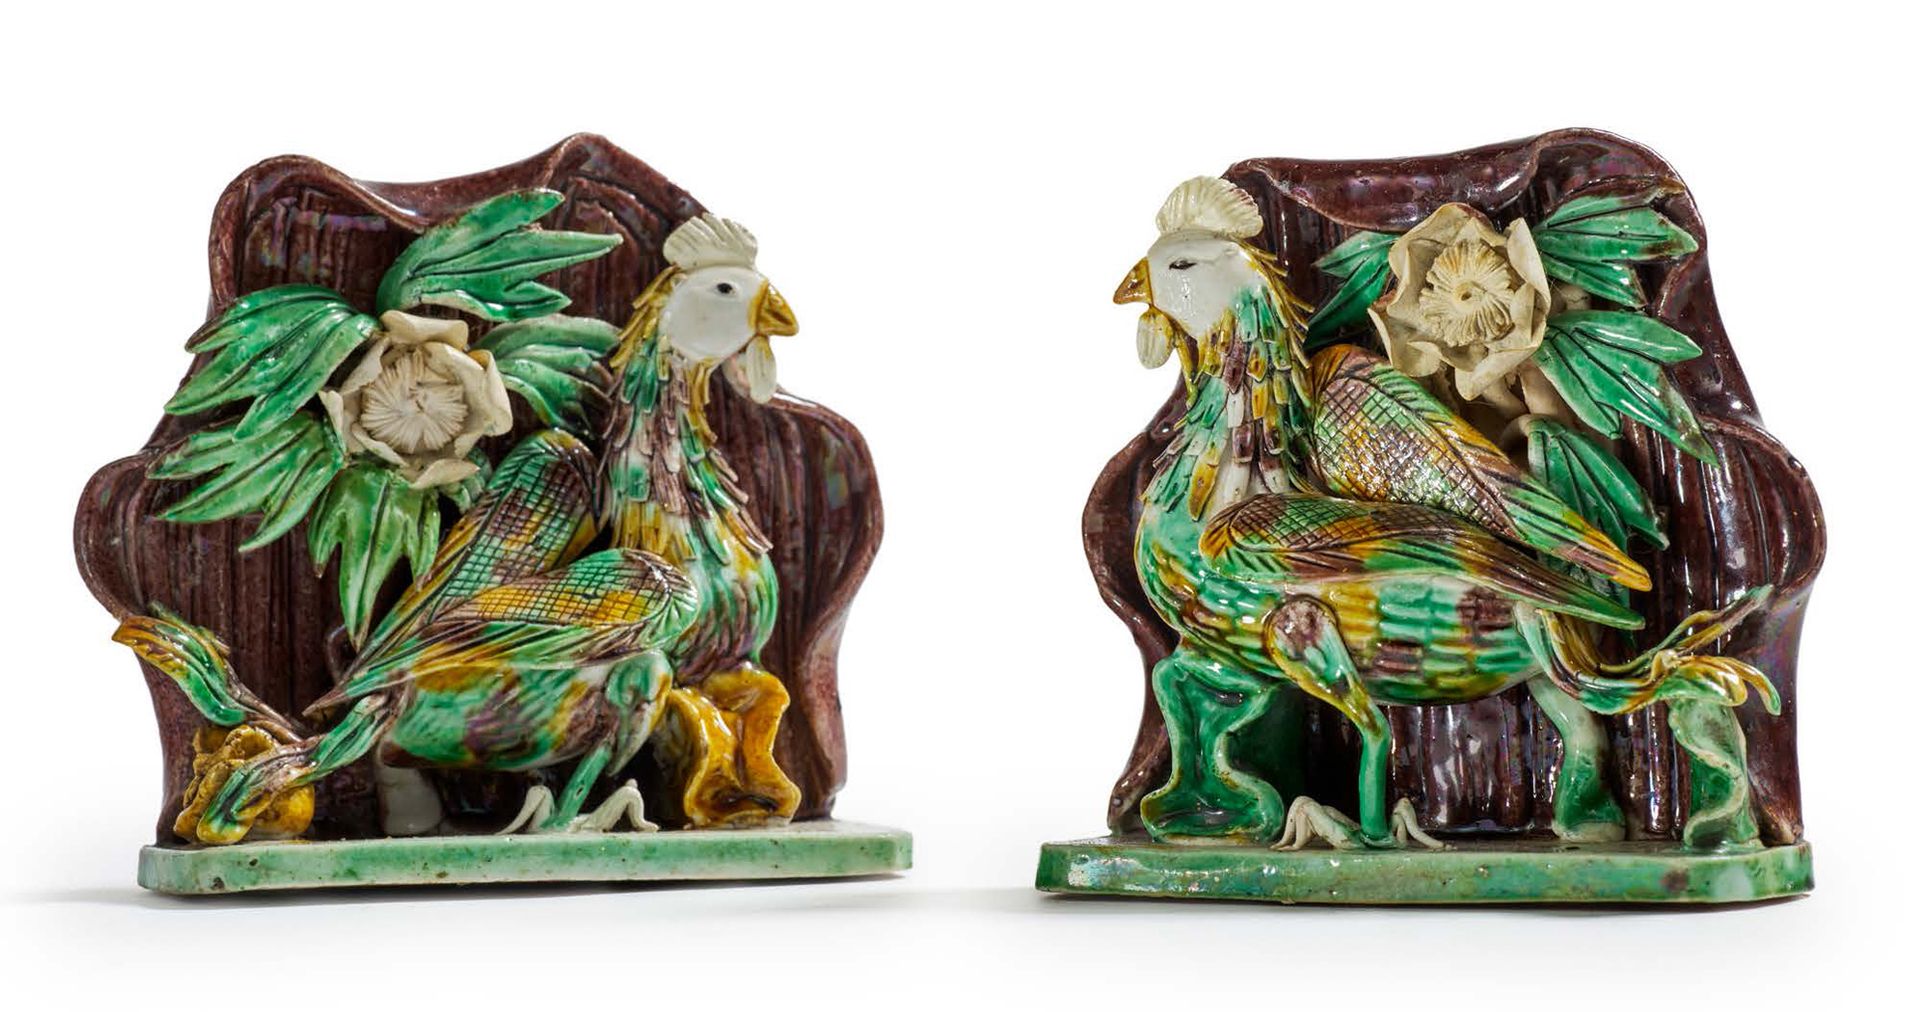 CHINE XVIIIe SIÈCLE, PÉRIODE KANGXI (1661 - 1722) 
清 康熙

雙件三彩瓷鳯凰牡丹插屏